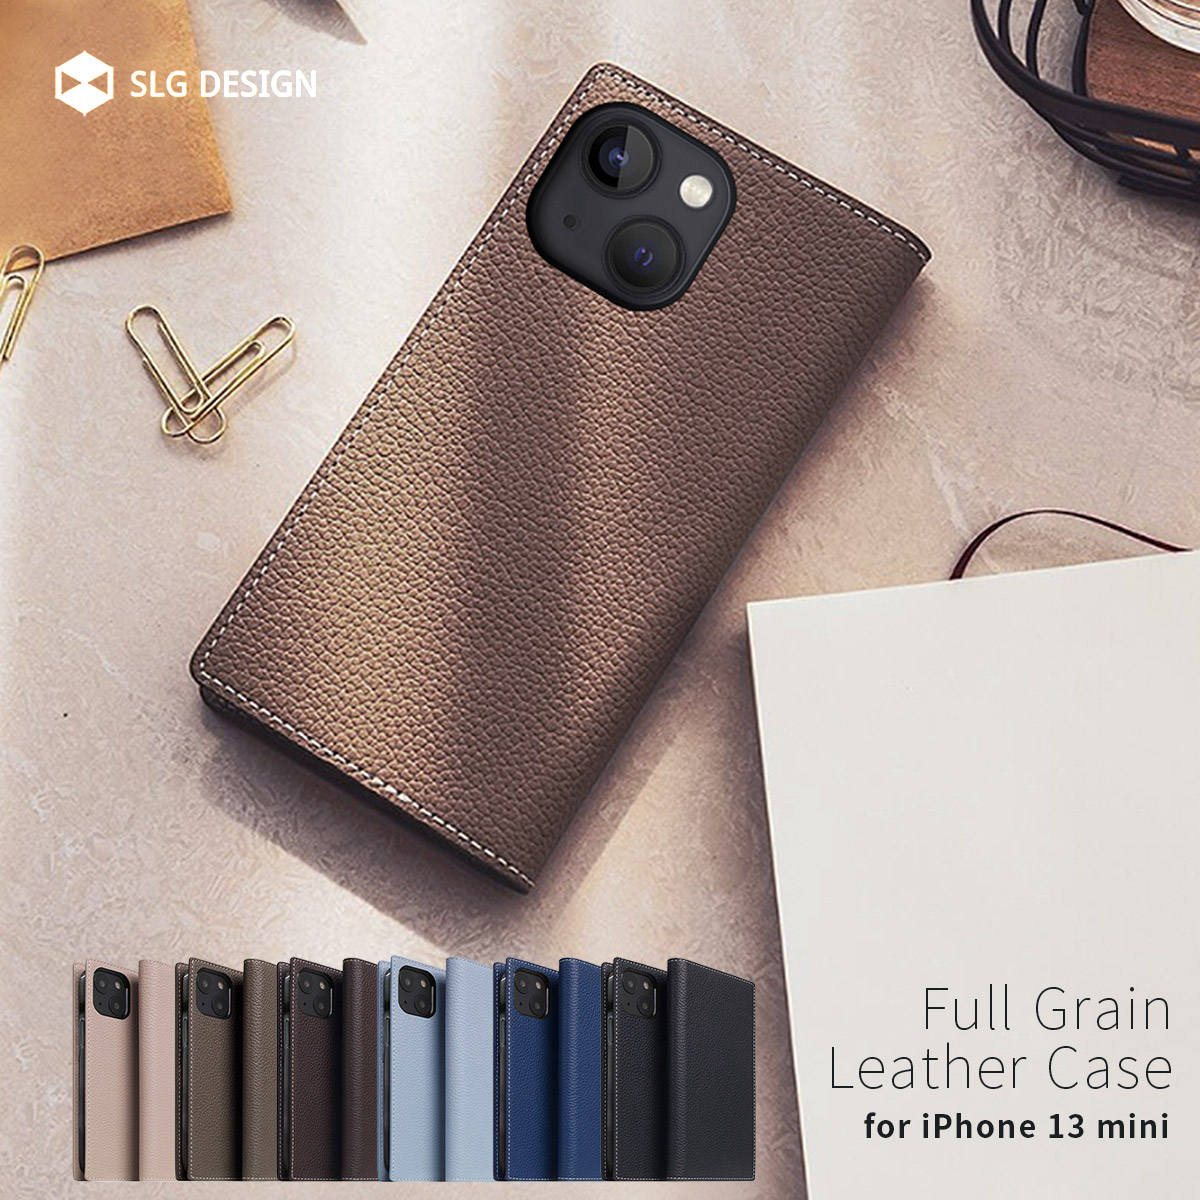 【iPhone 13 mini】Full Grain Leather Case